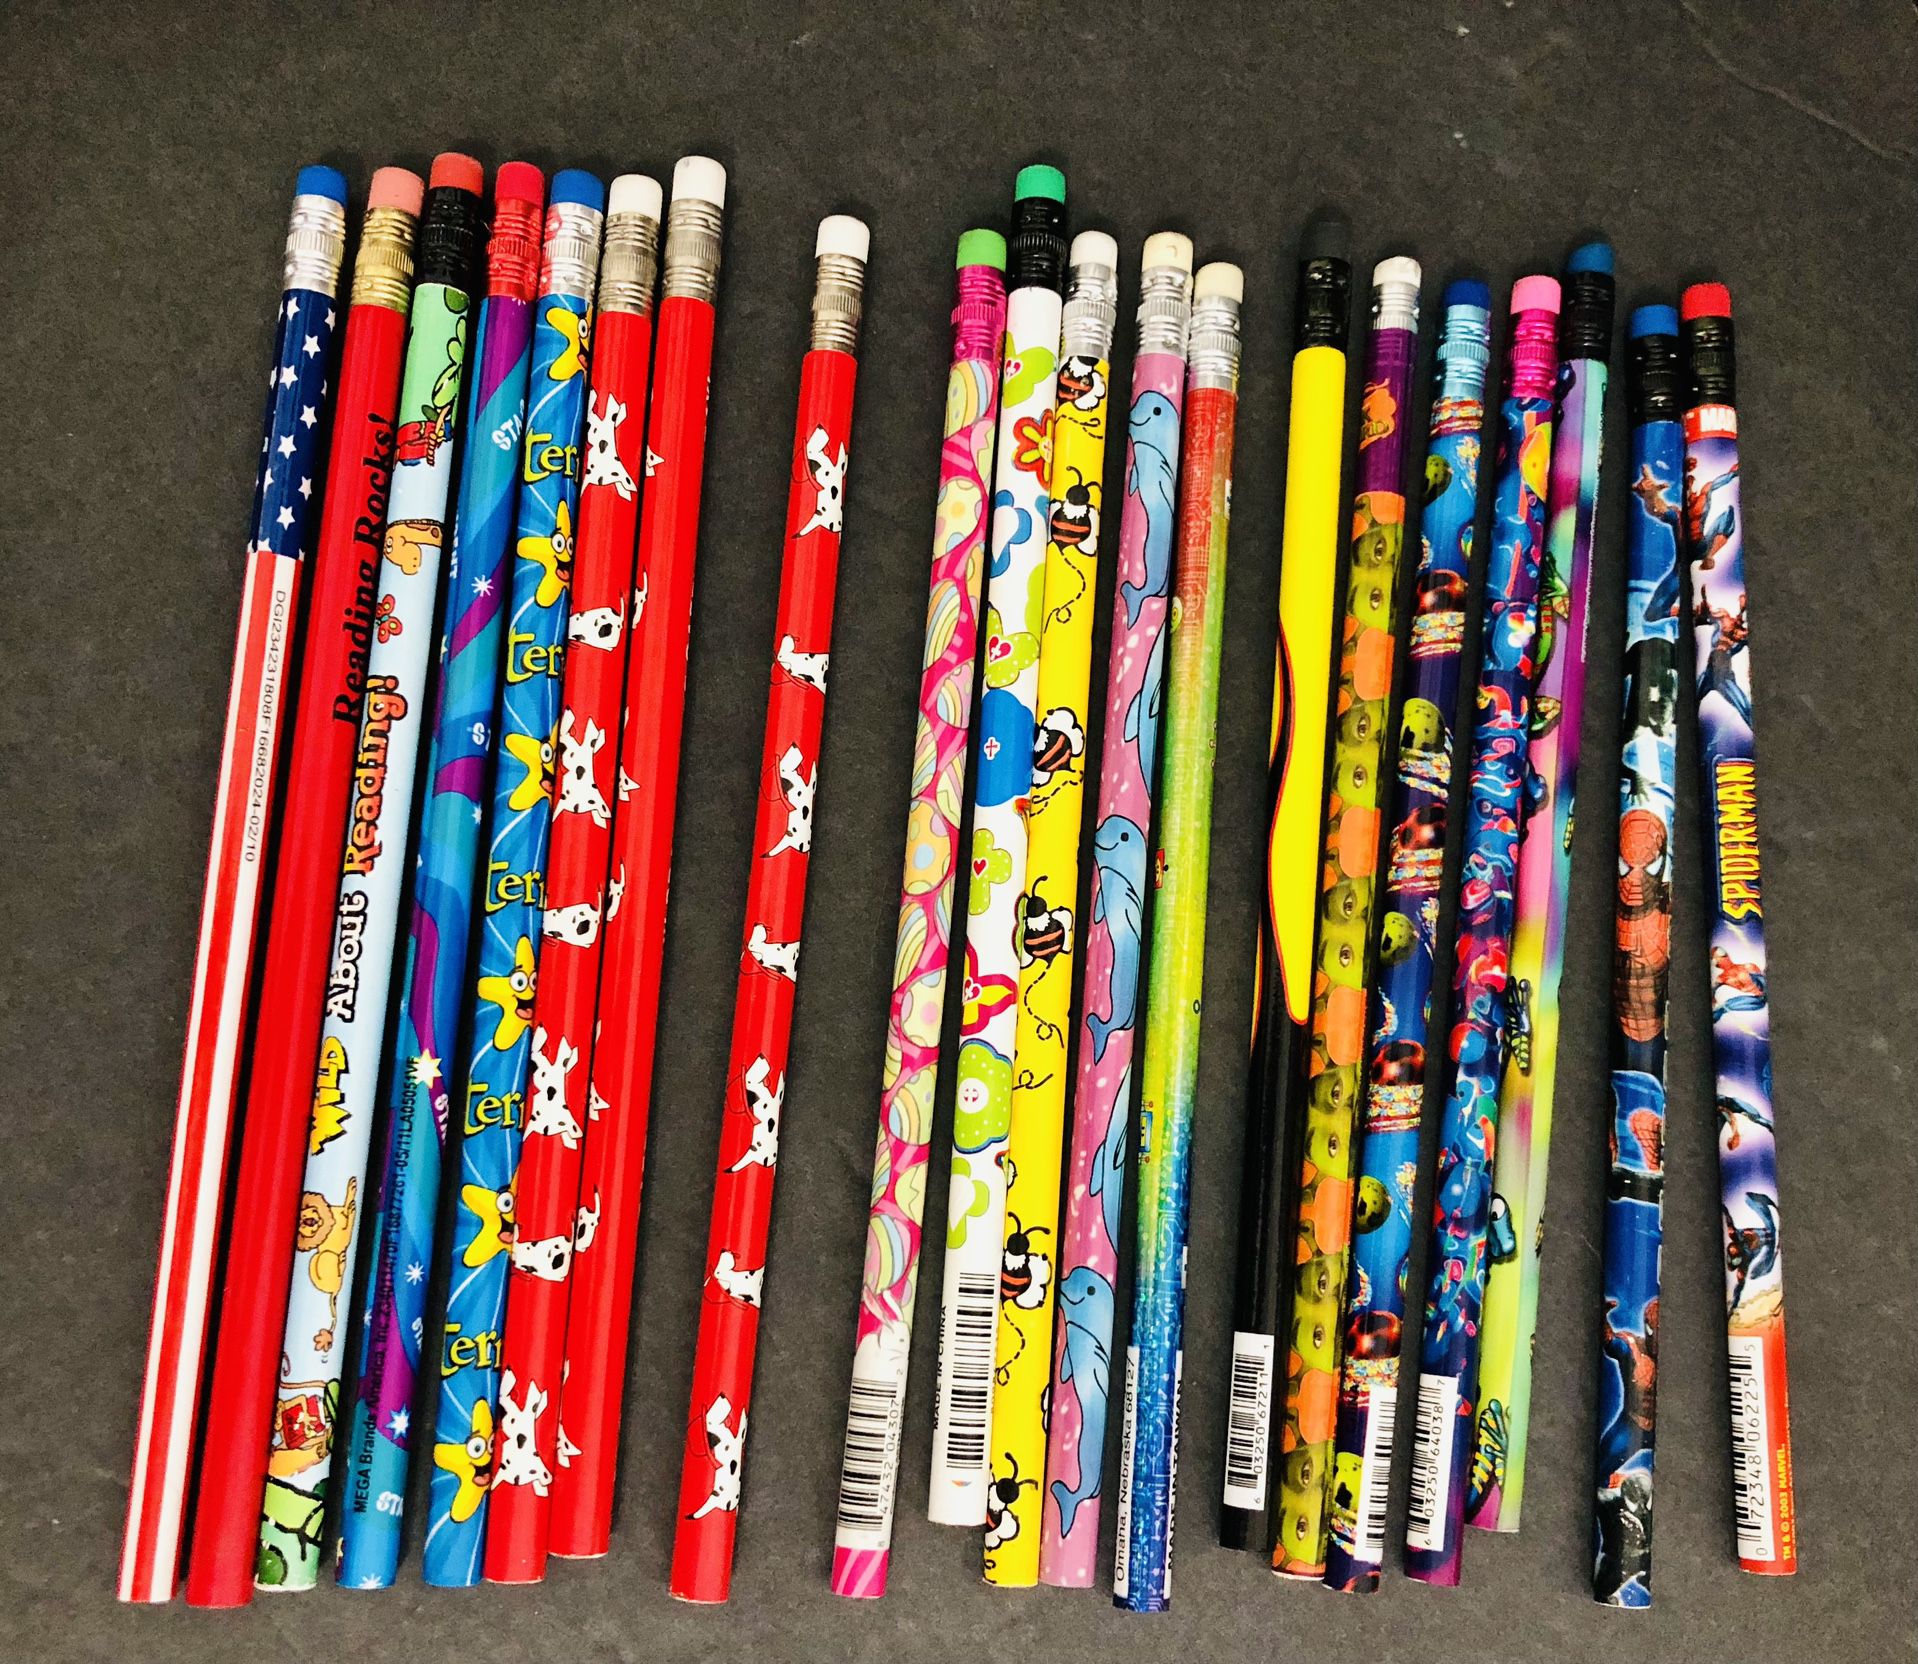 NEW Assorted Theme Pencils Lot Of 21 Pencils 